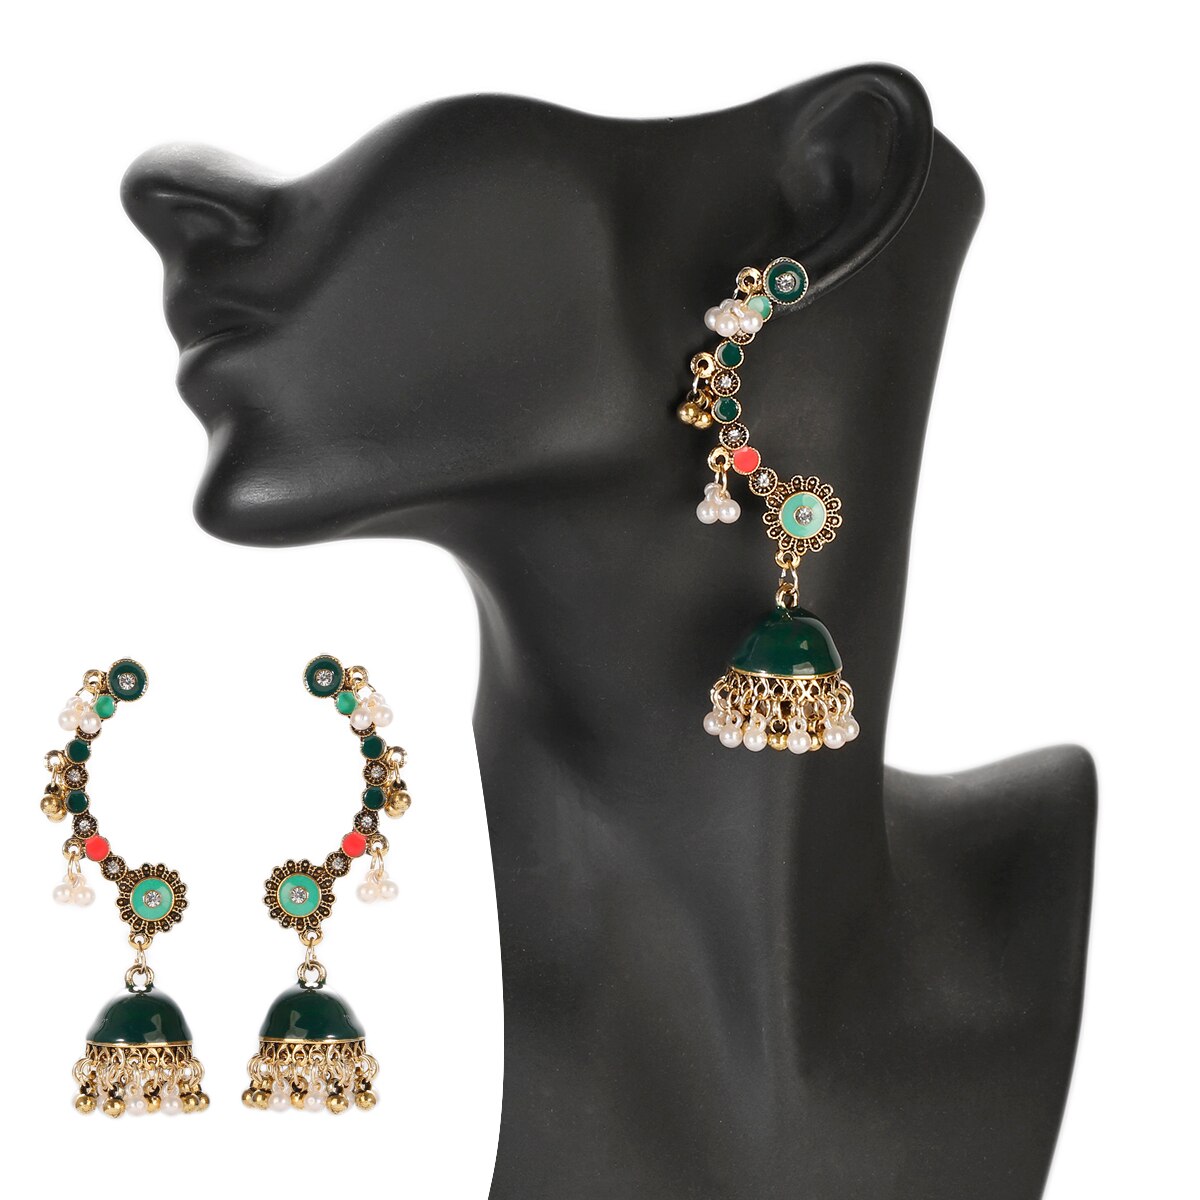 Vintage-Black-Dripping-Oil-Indian-Earring-For-Women-Pendient-Ethnic-Flower-Earring-Tibetan-Jewelry-B-1005004041465466-6